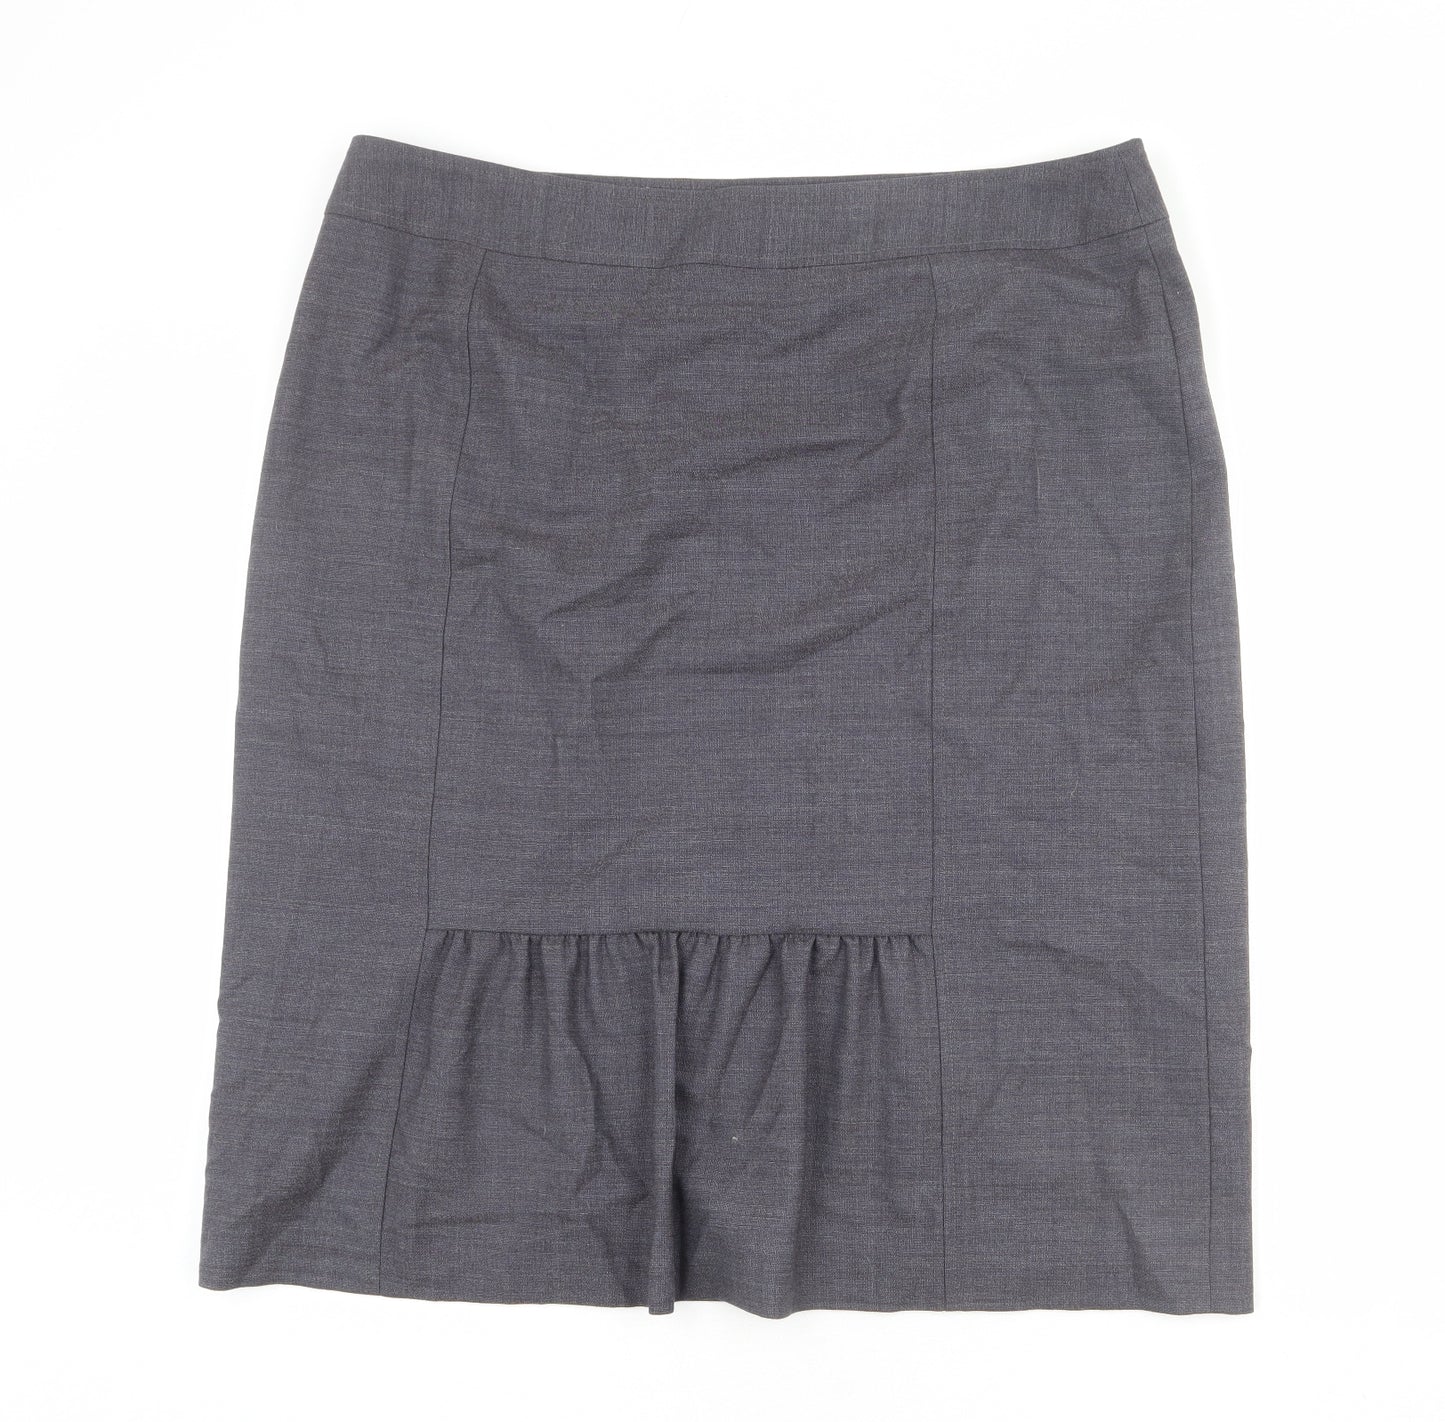 EAST Womens Grey Wool Straight & Pencil Skirt Size 18 Zip - Ruffle Detail